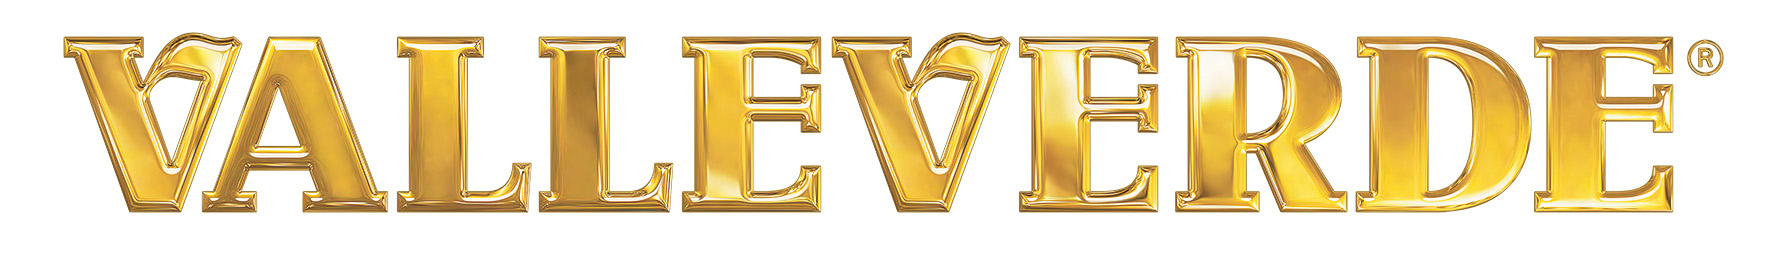 valleverde_logo_k